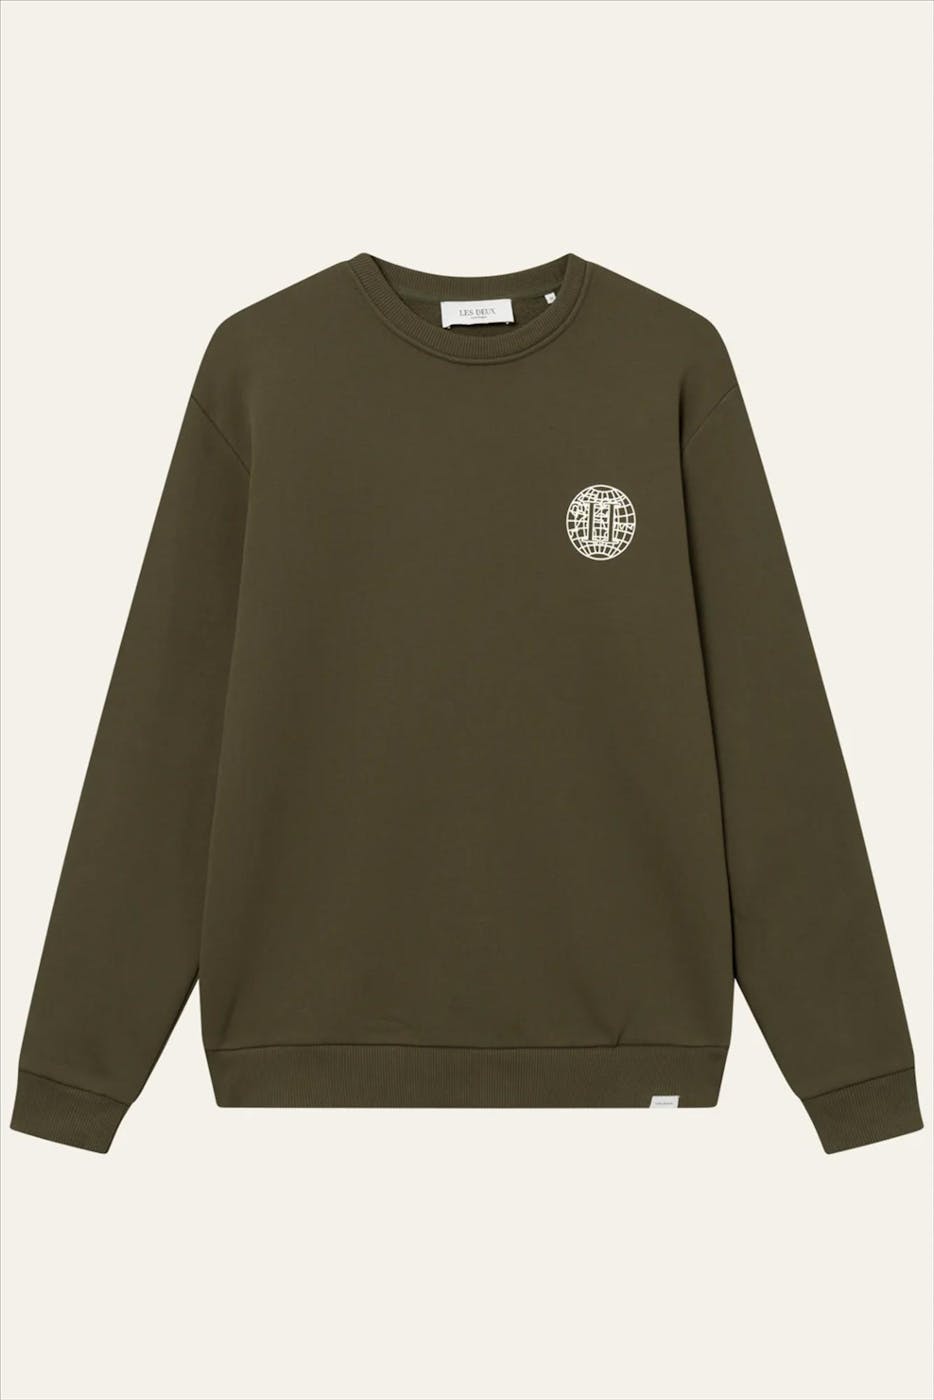 LES DEUX  - Olijfgroene Globe sweater